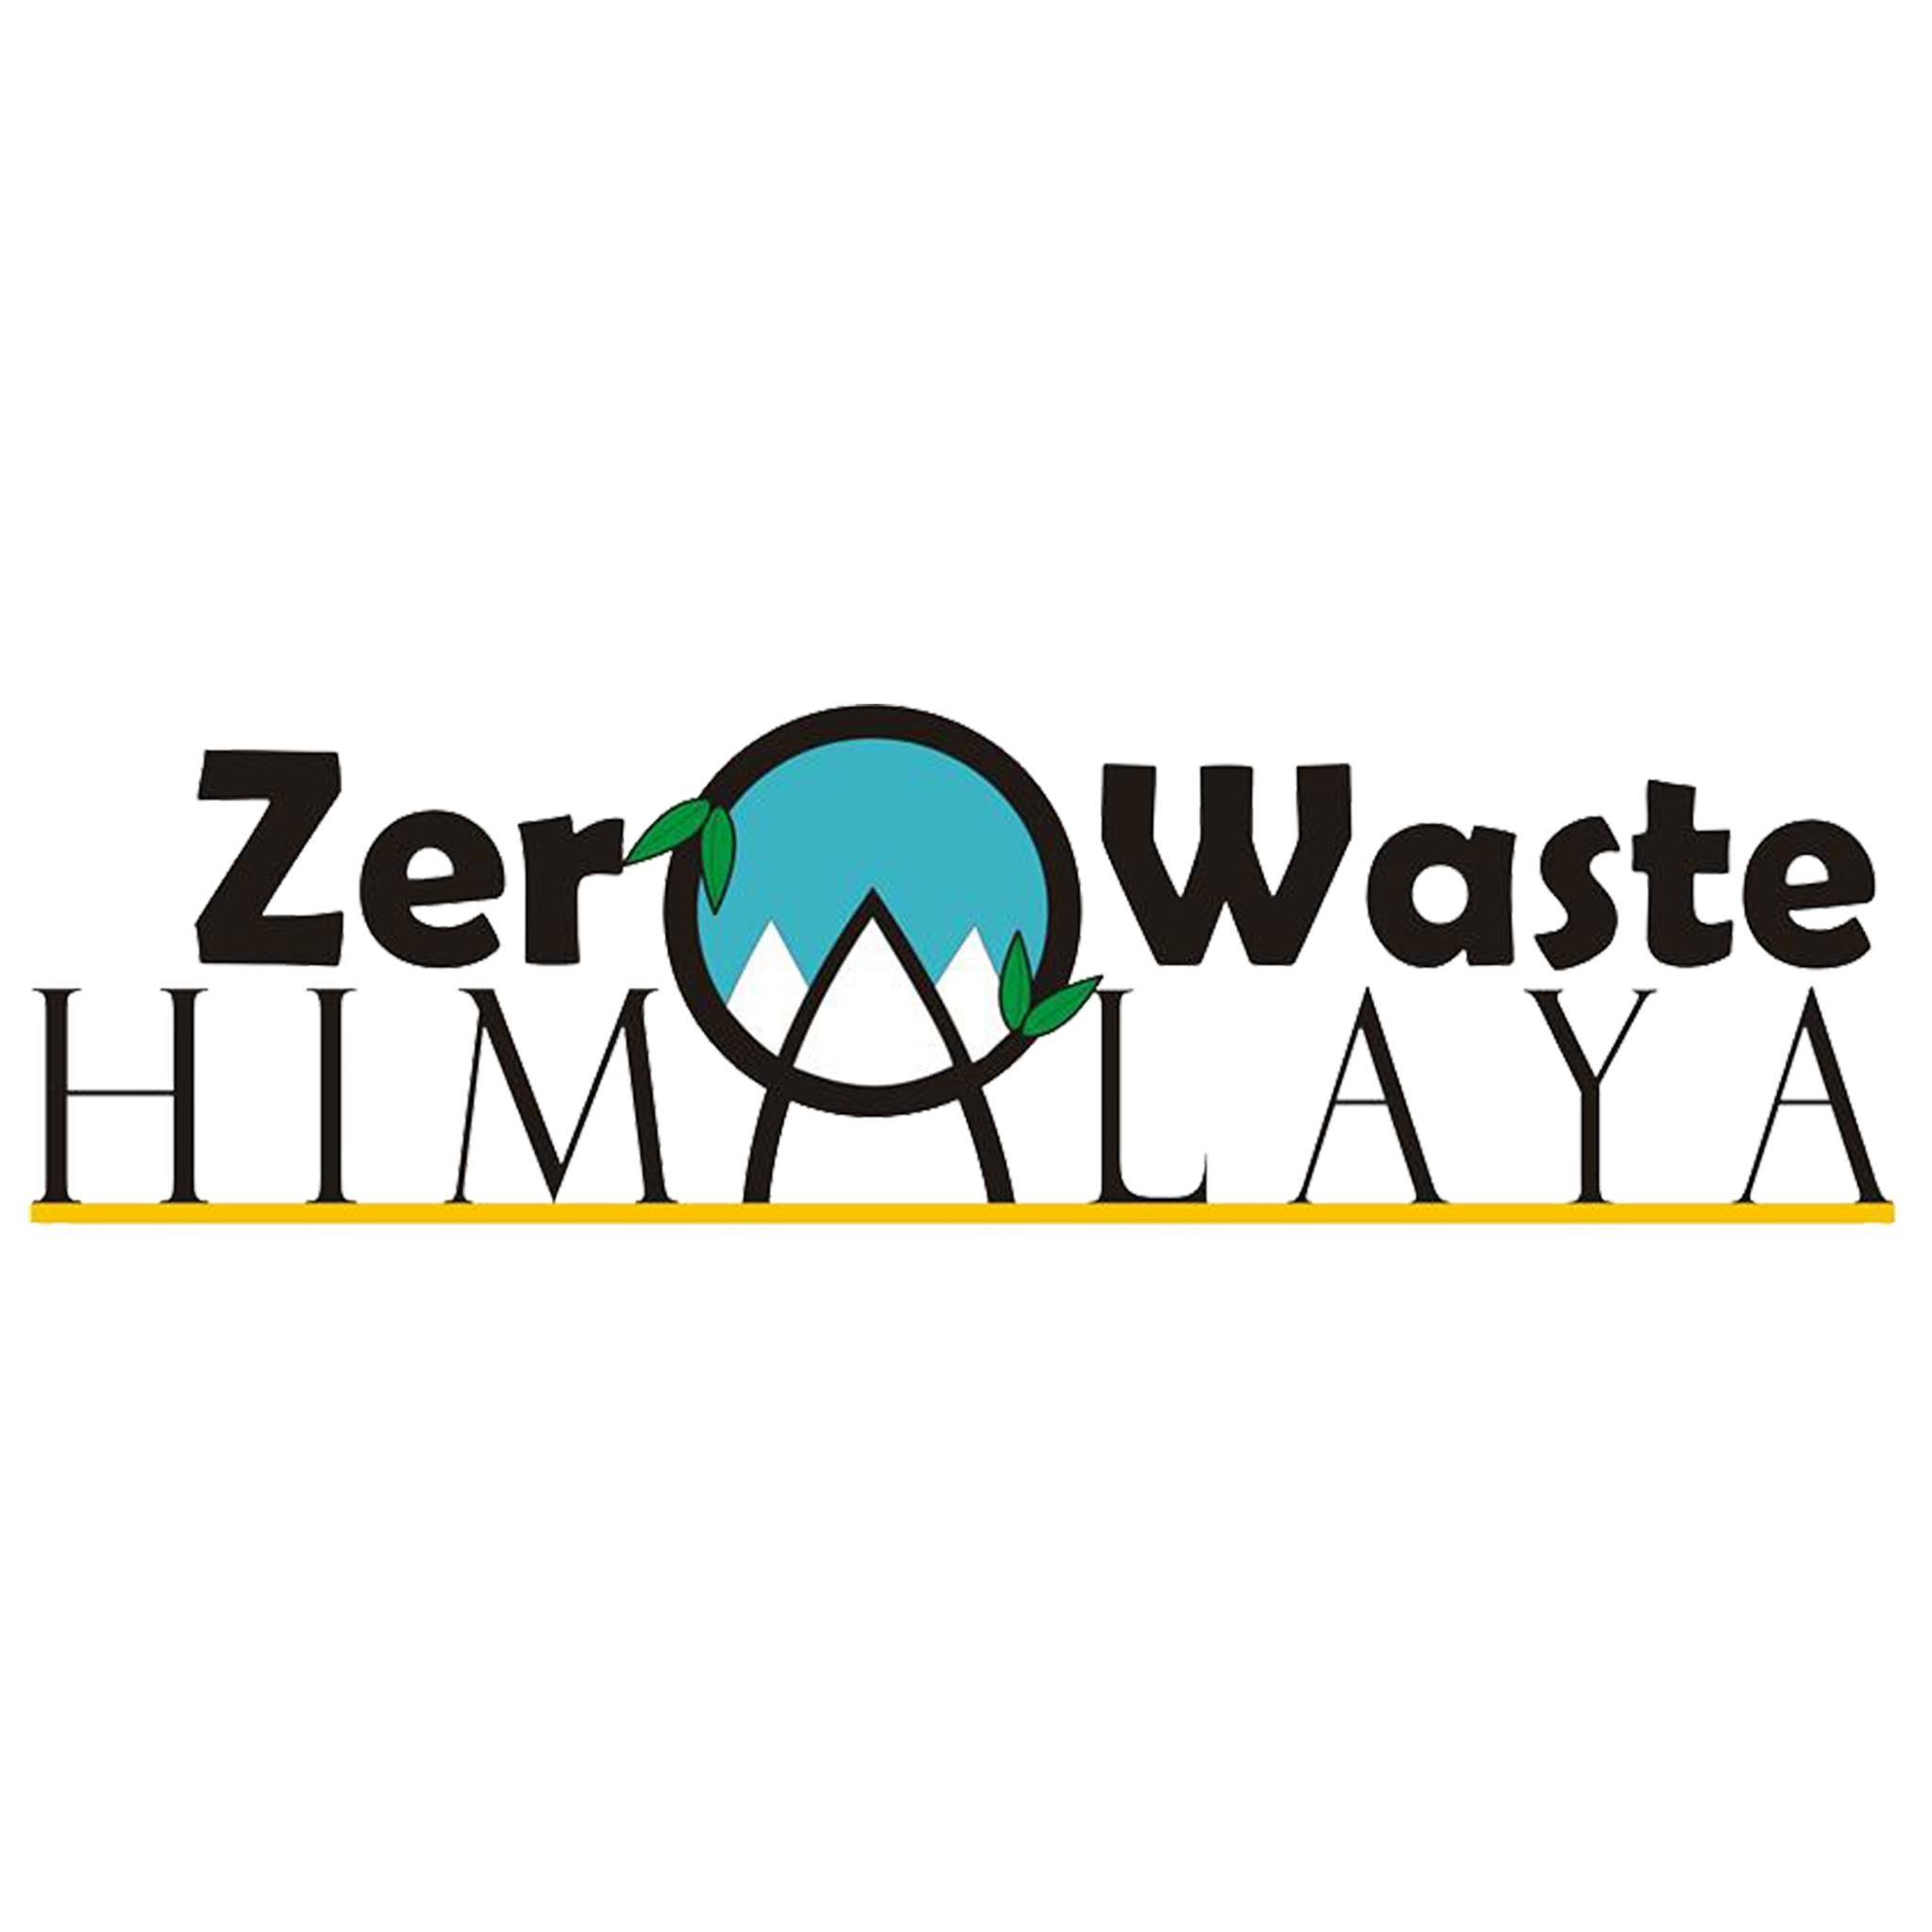 Zero Waste Himalaya, India